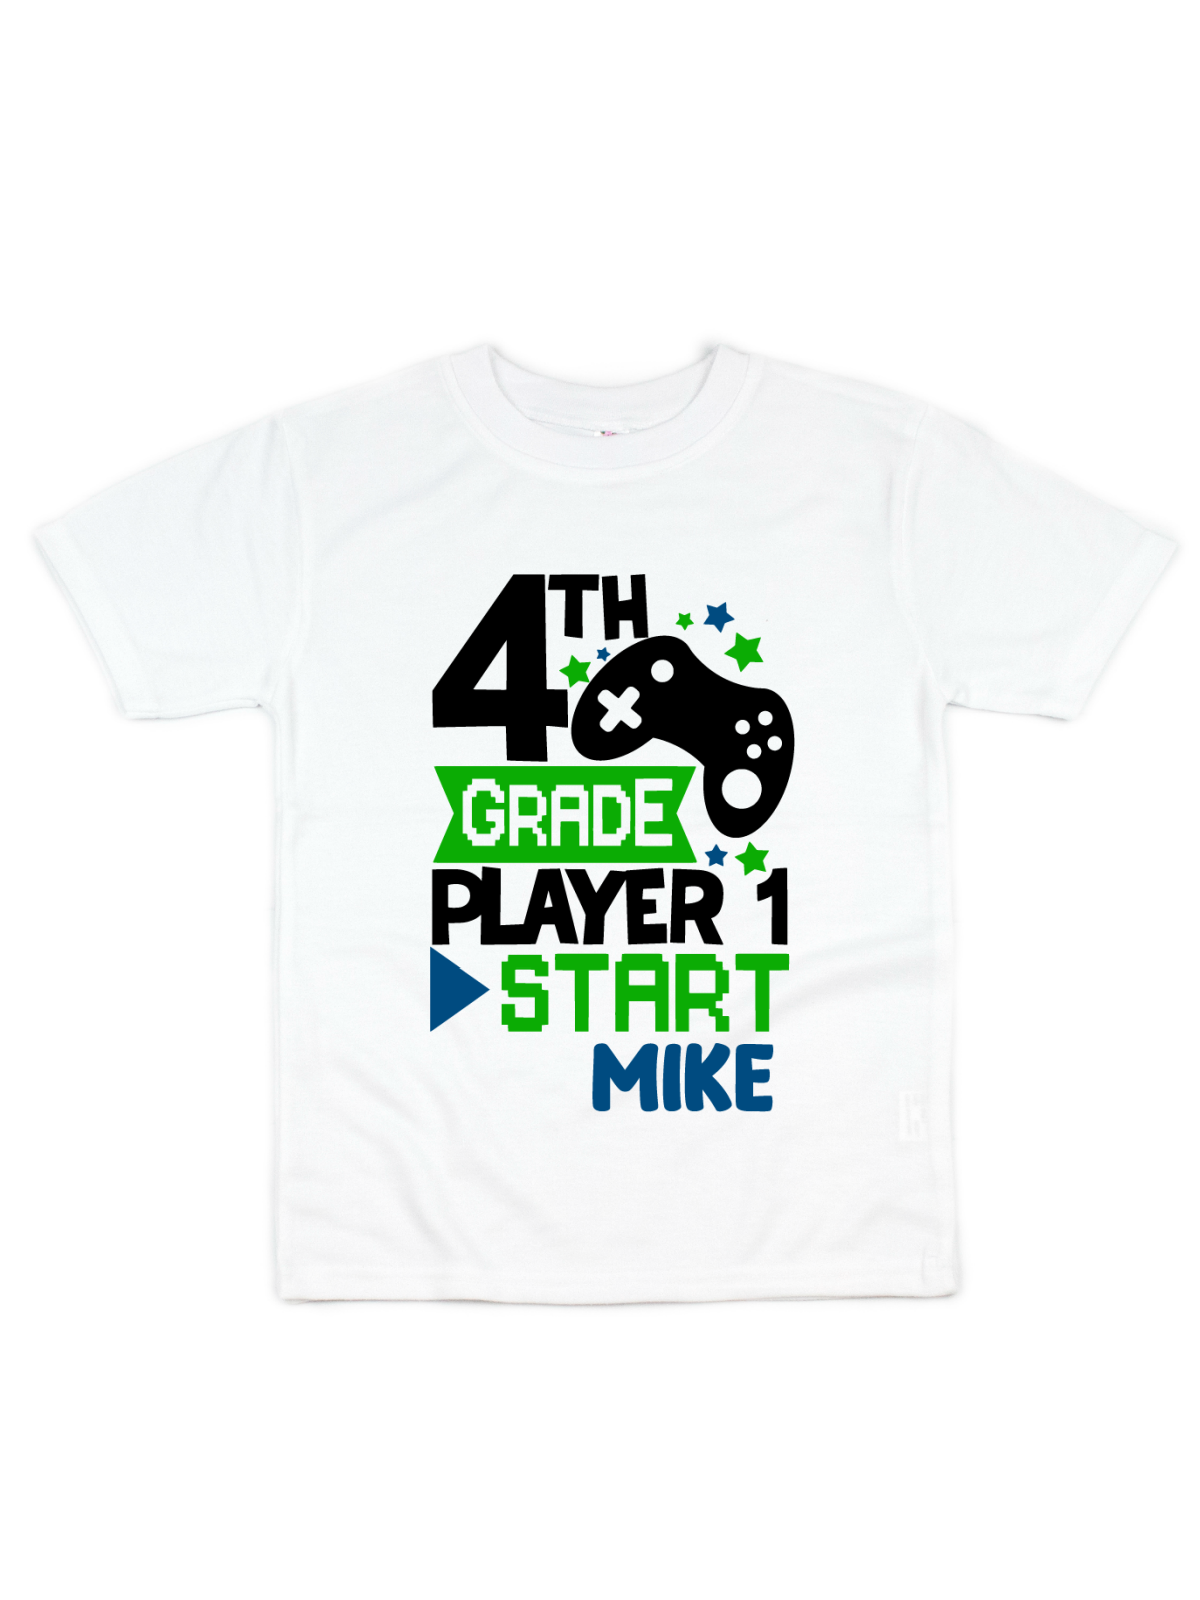 4th grade player 1 start kids personalized shirt